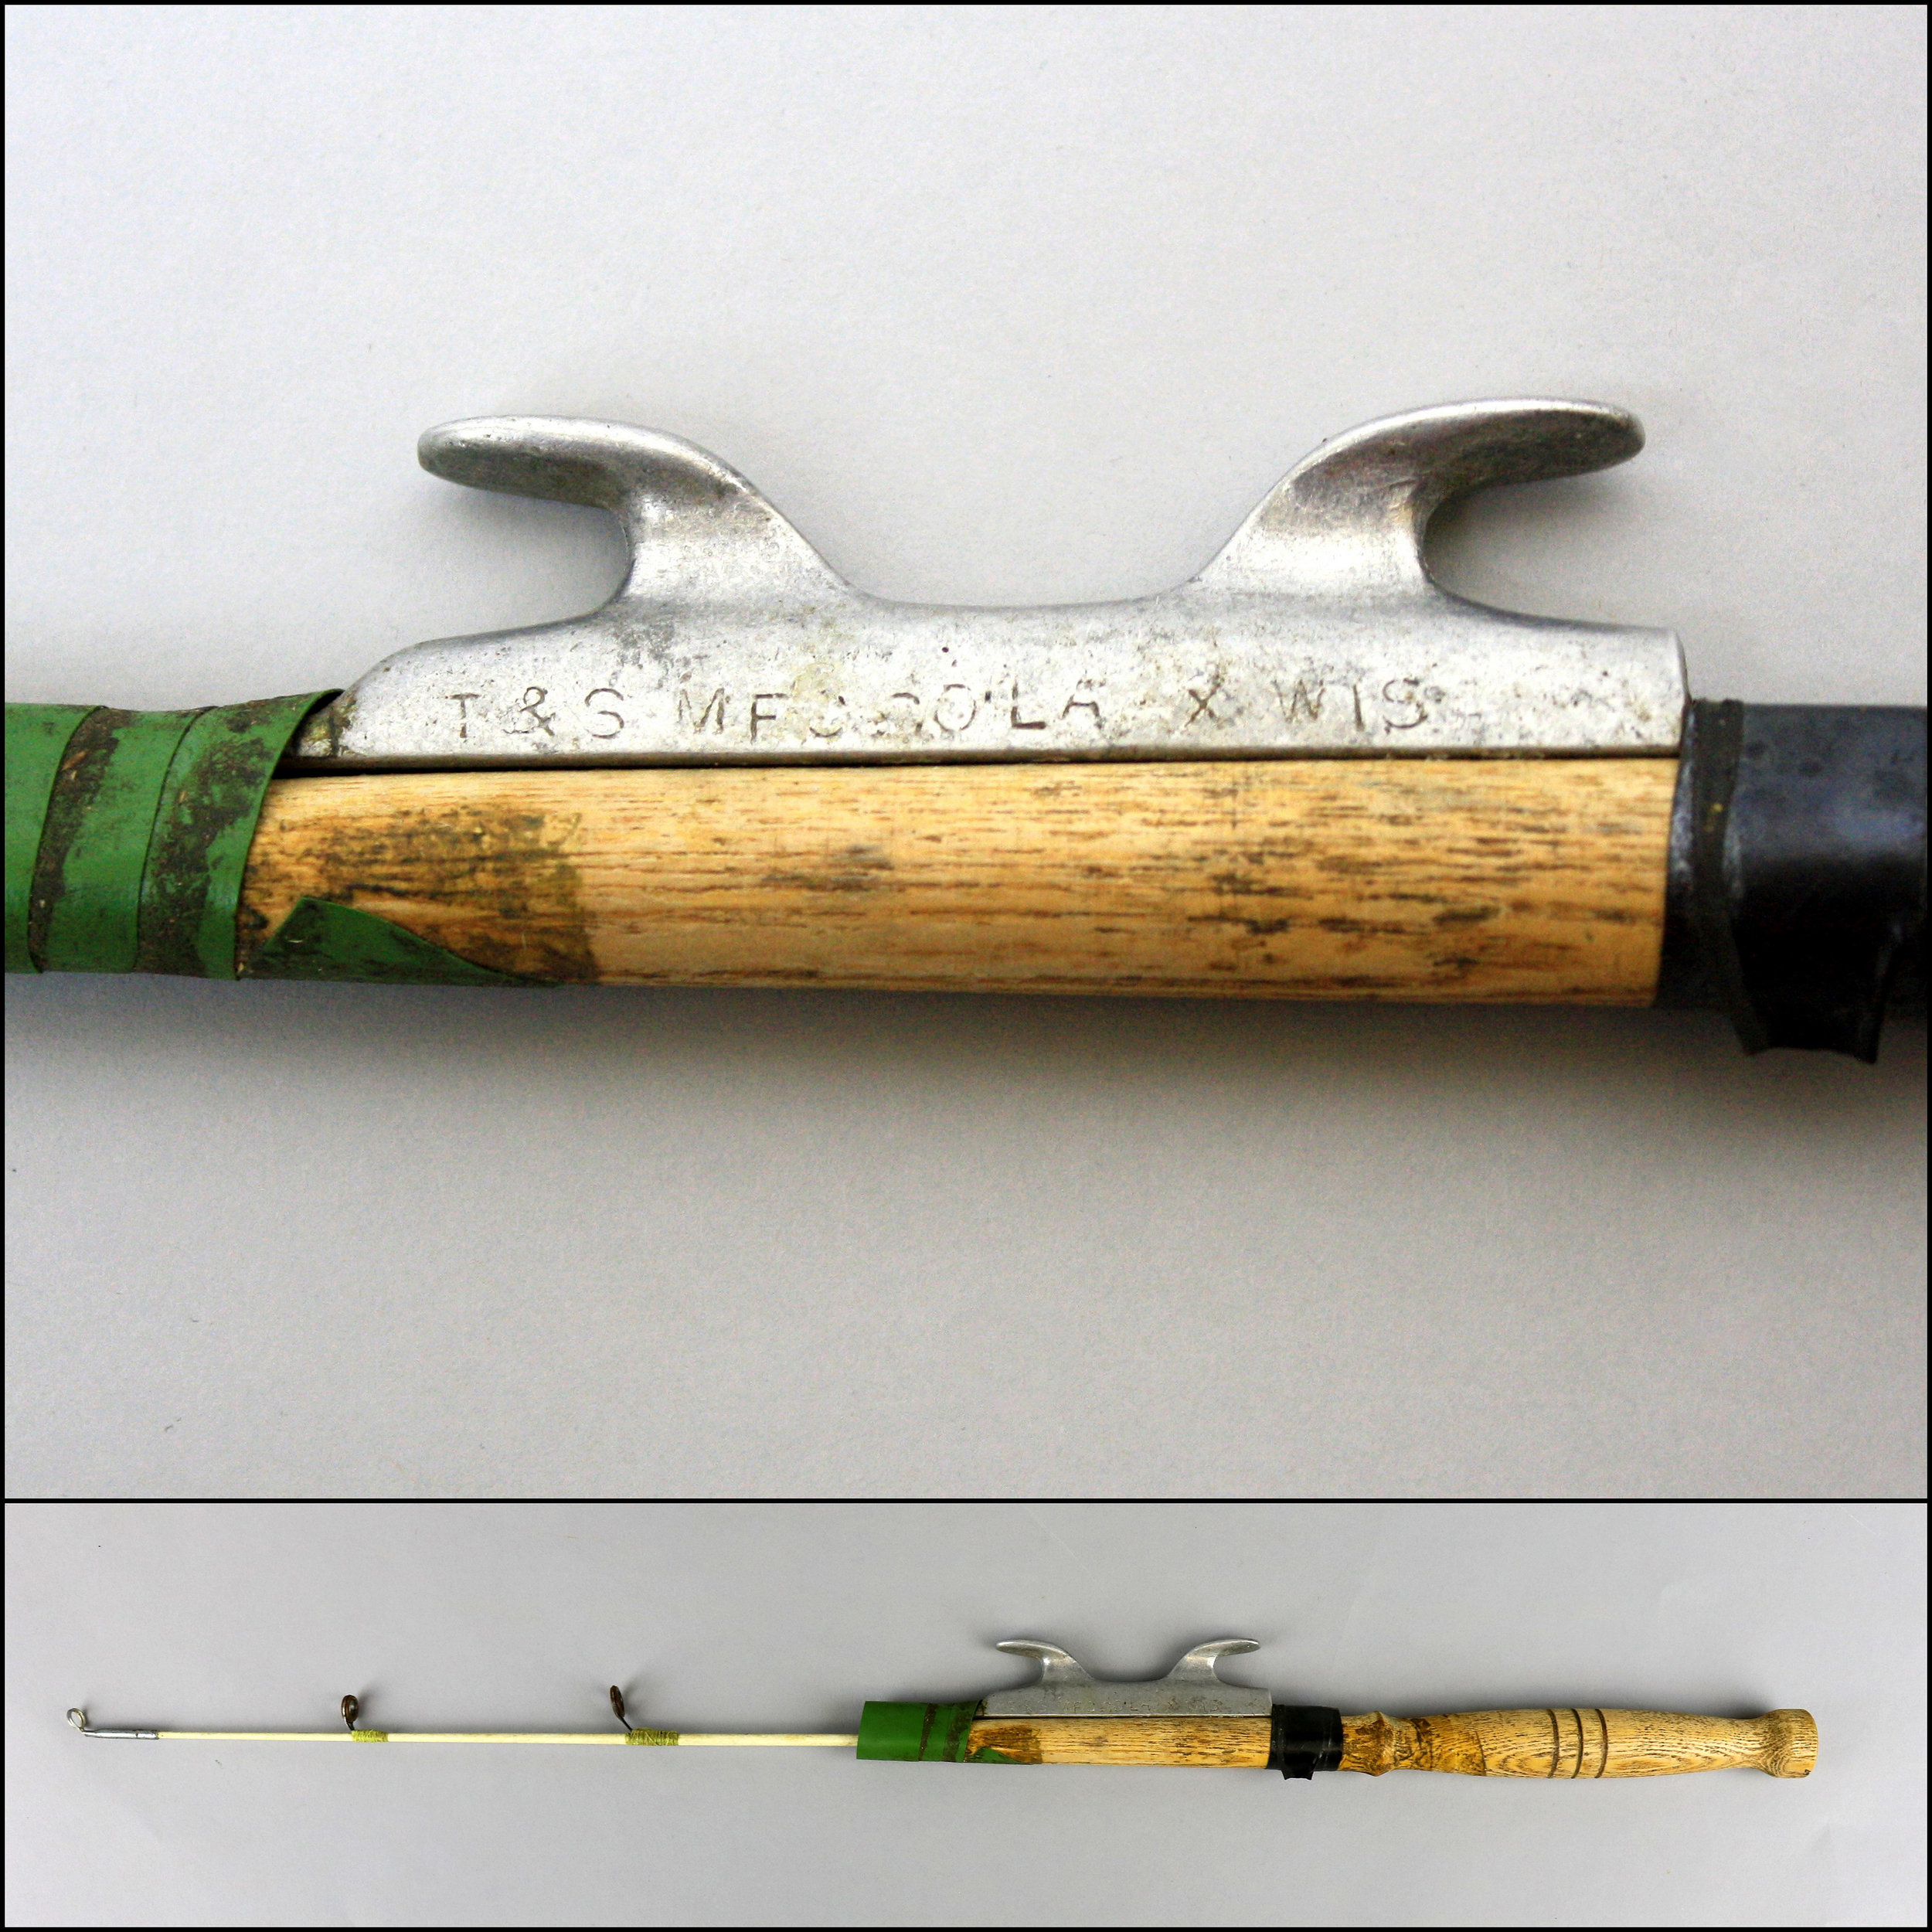 DIY Ice Fishing Rod Building or Repair Pure Cork Wood Handle with